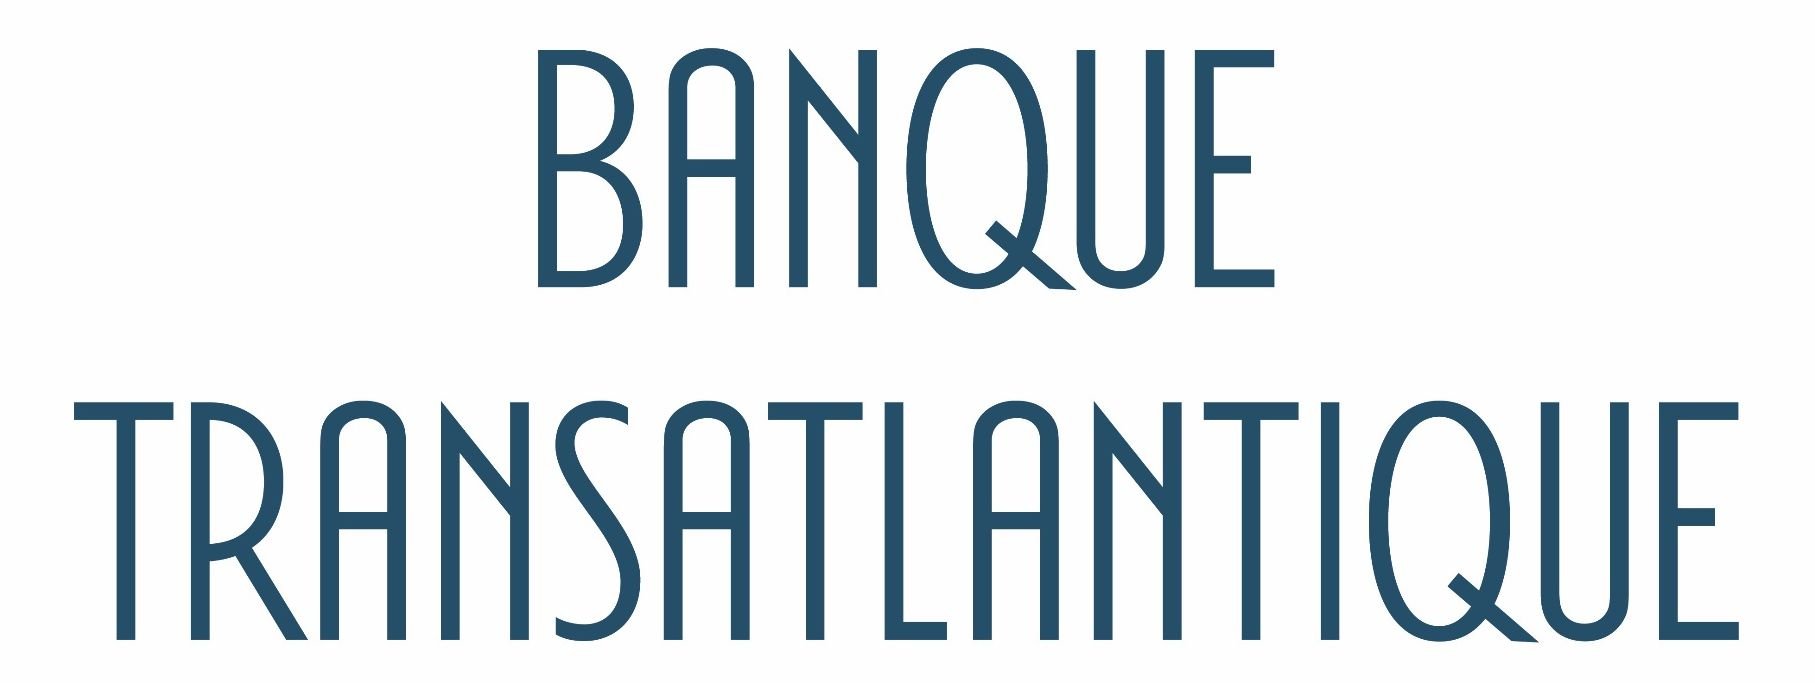 Banque transatlantique